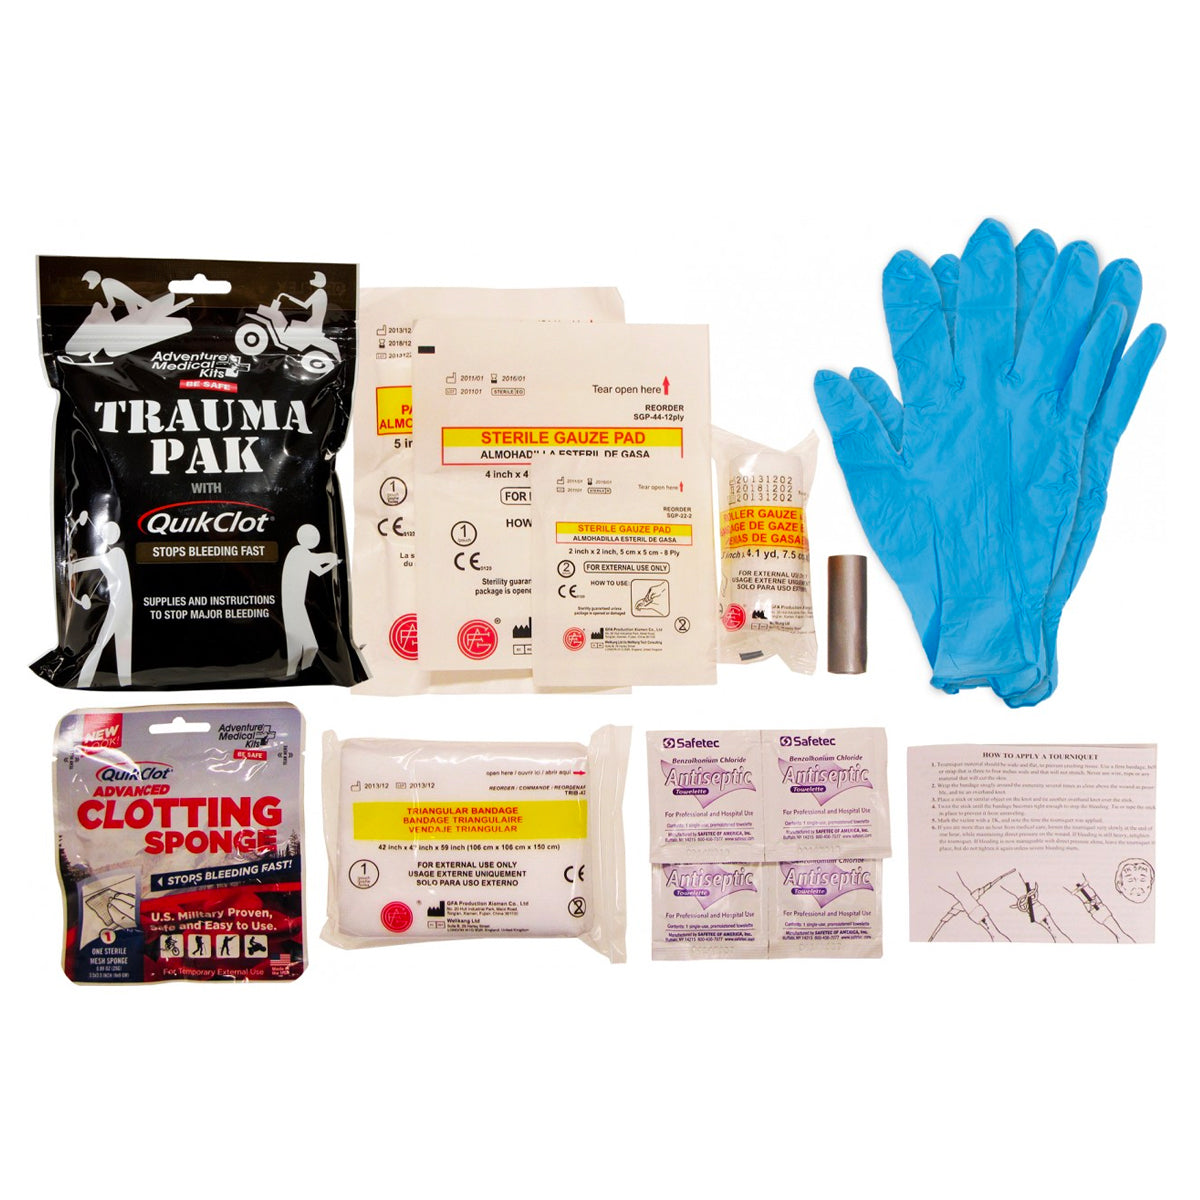 Adventure Medical Kits Trauma Pak in Adventure Medical Kits Trauma Pak by Tender Outdoor | Gear - goHUNT Shop by GOHUNT | Tender Outdoor - GOHUNT Shop